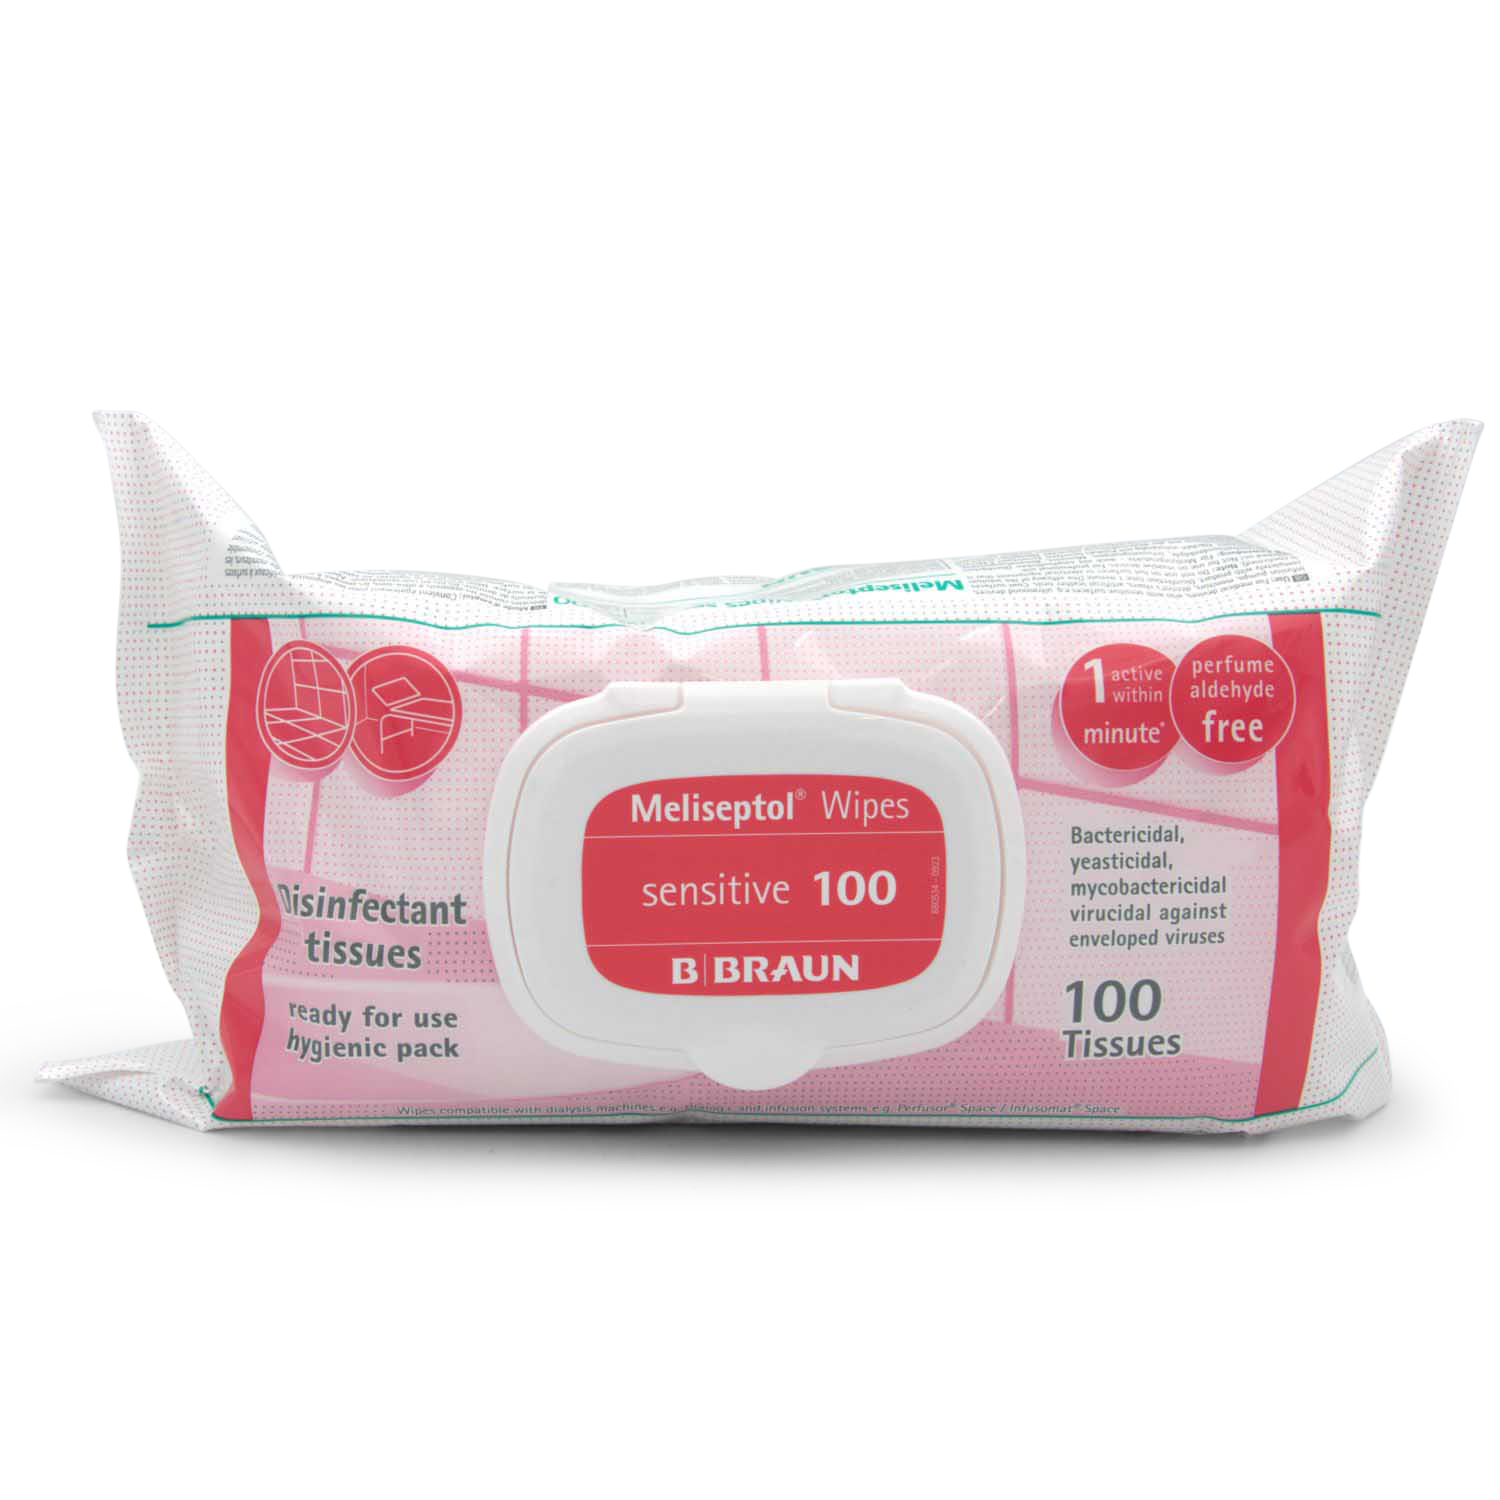 Meliseptol® Wipes sensitive 100 (18 x 20 cm, Flowpack)